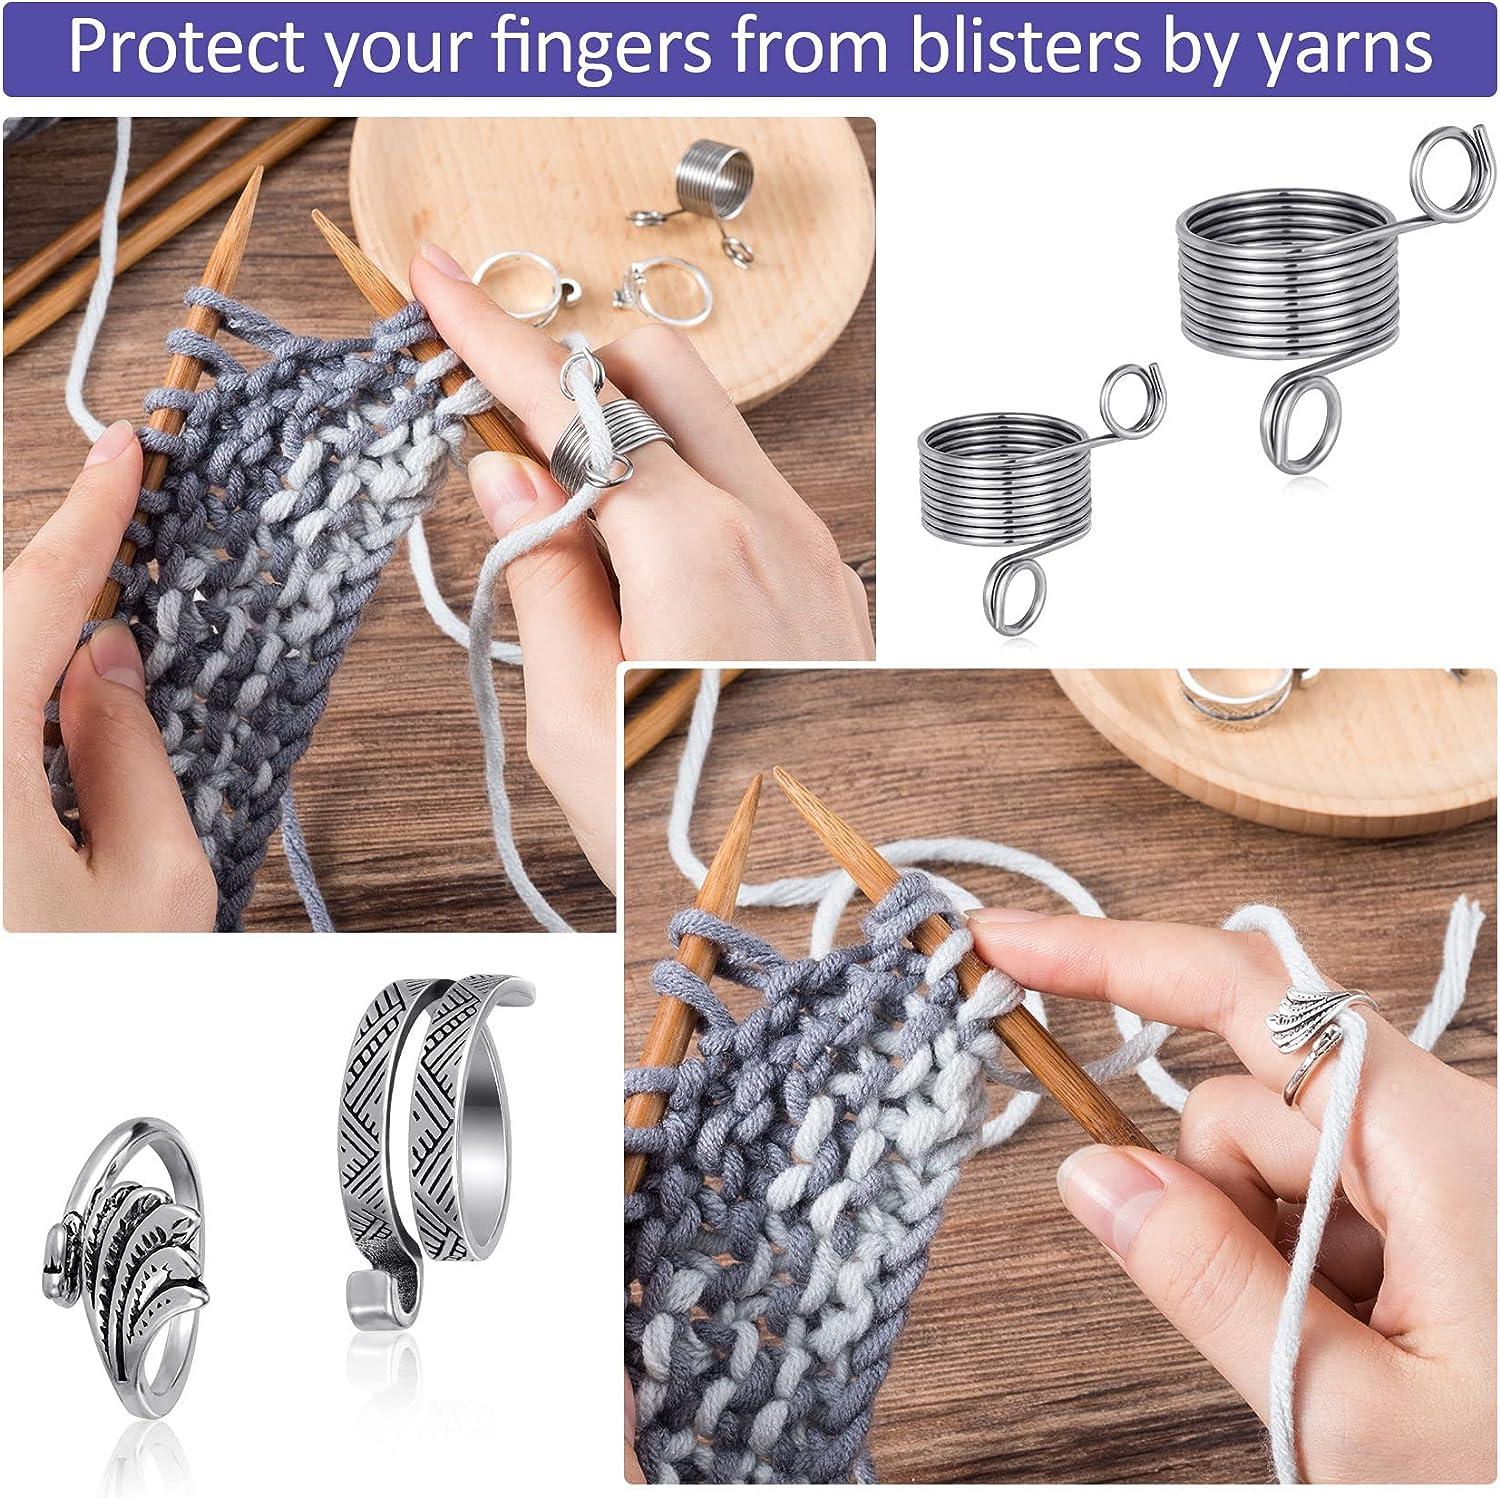  Crochet Rings, 10 Pieces Adjustable Knitting Rings Crochet  Finger Rings, Metal Open Yarn Guide Knitting Tension Rings for Knitting DIY  Crafts Crochet Finger Holders Knitting Ring Accessories